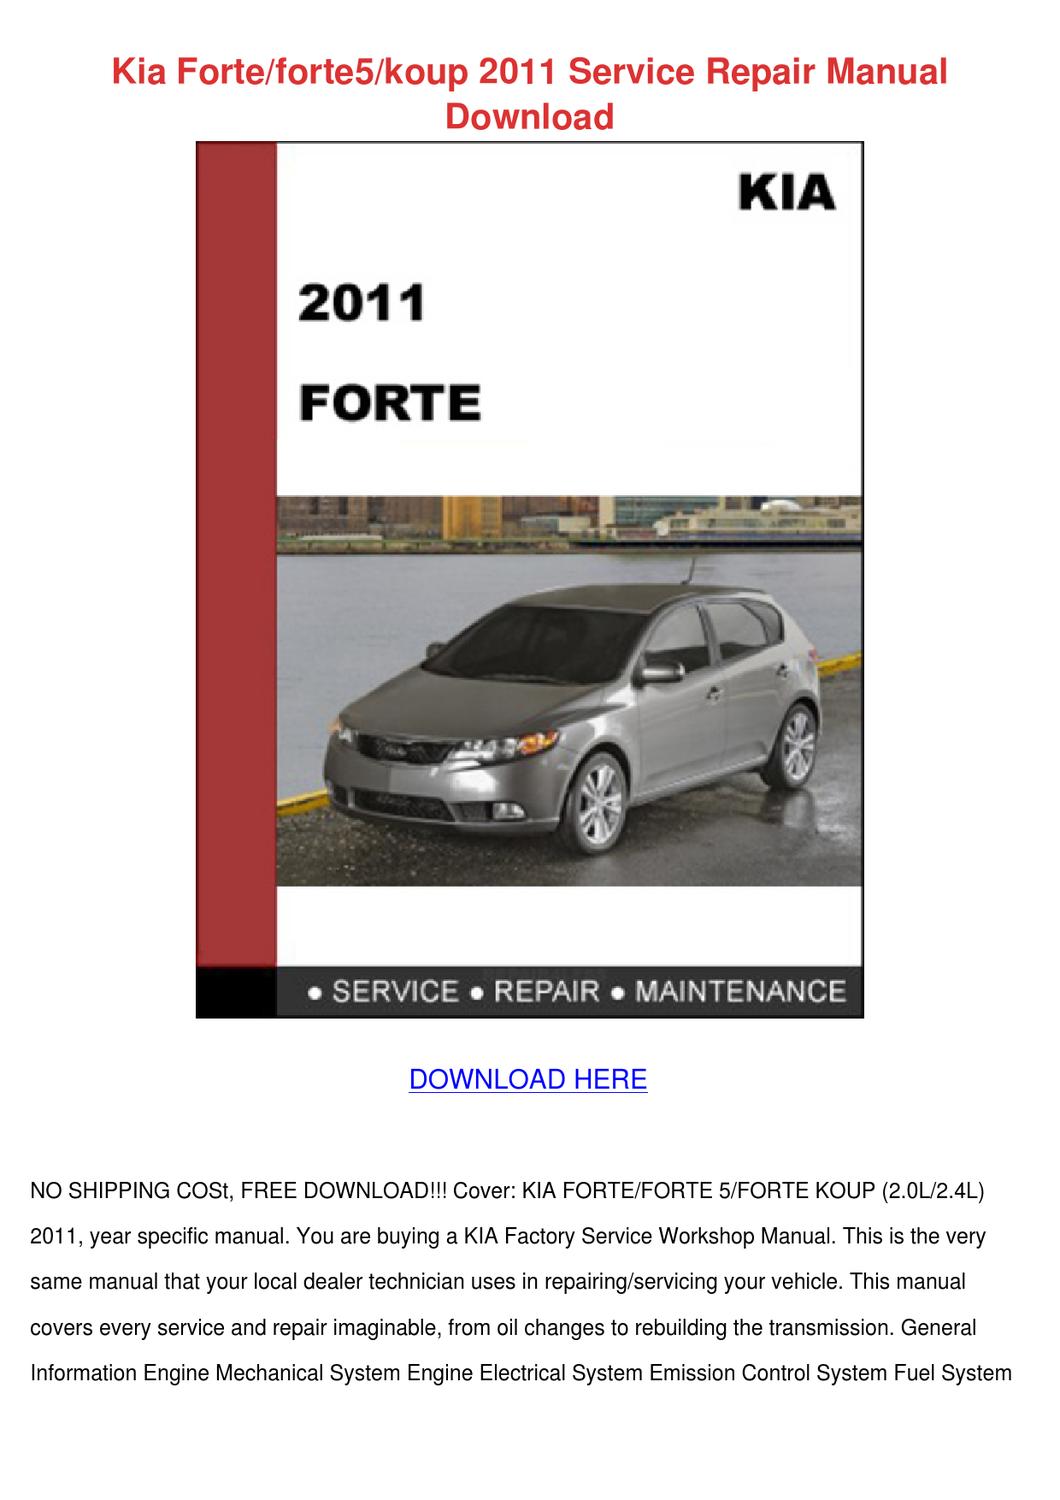 Where To Download Kia Forte Service Manual Pdf